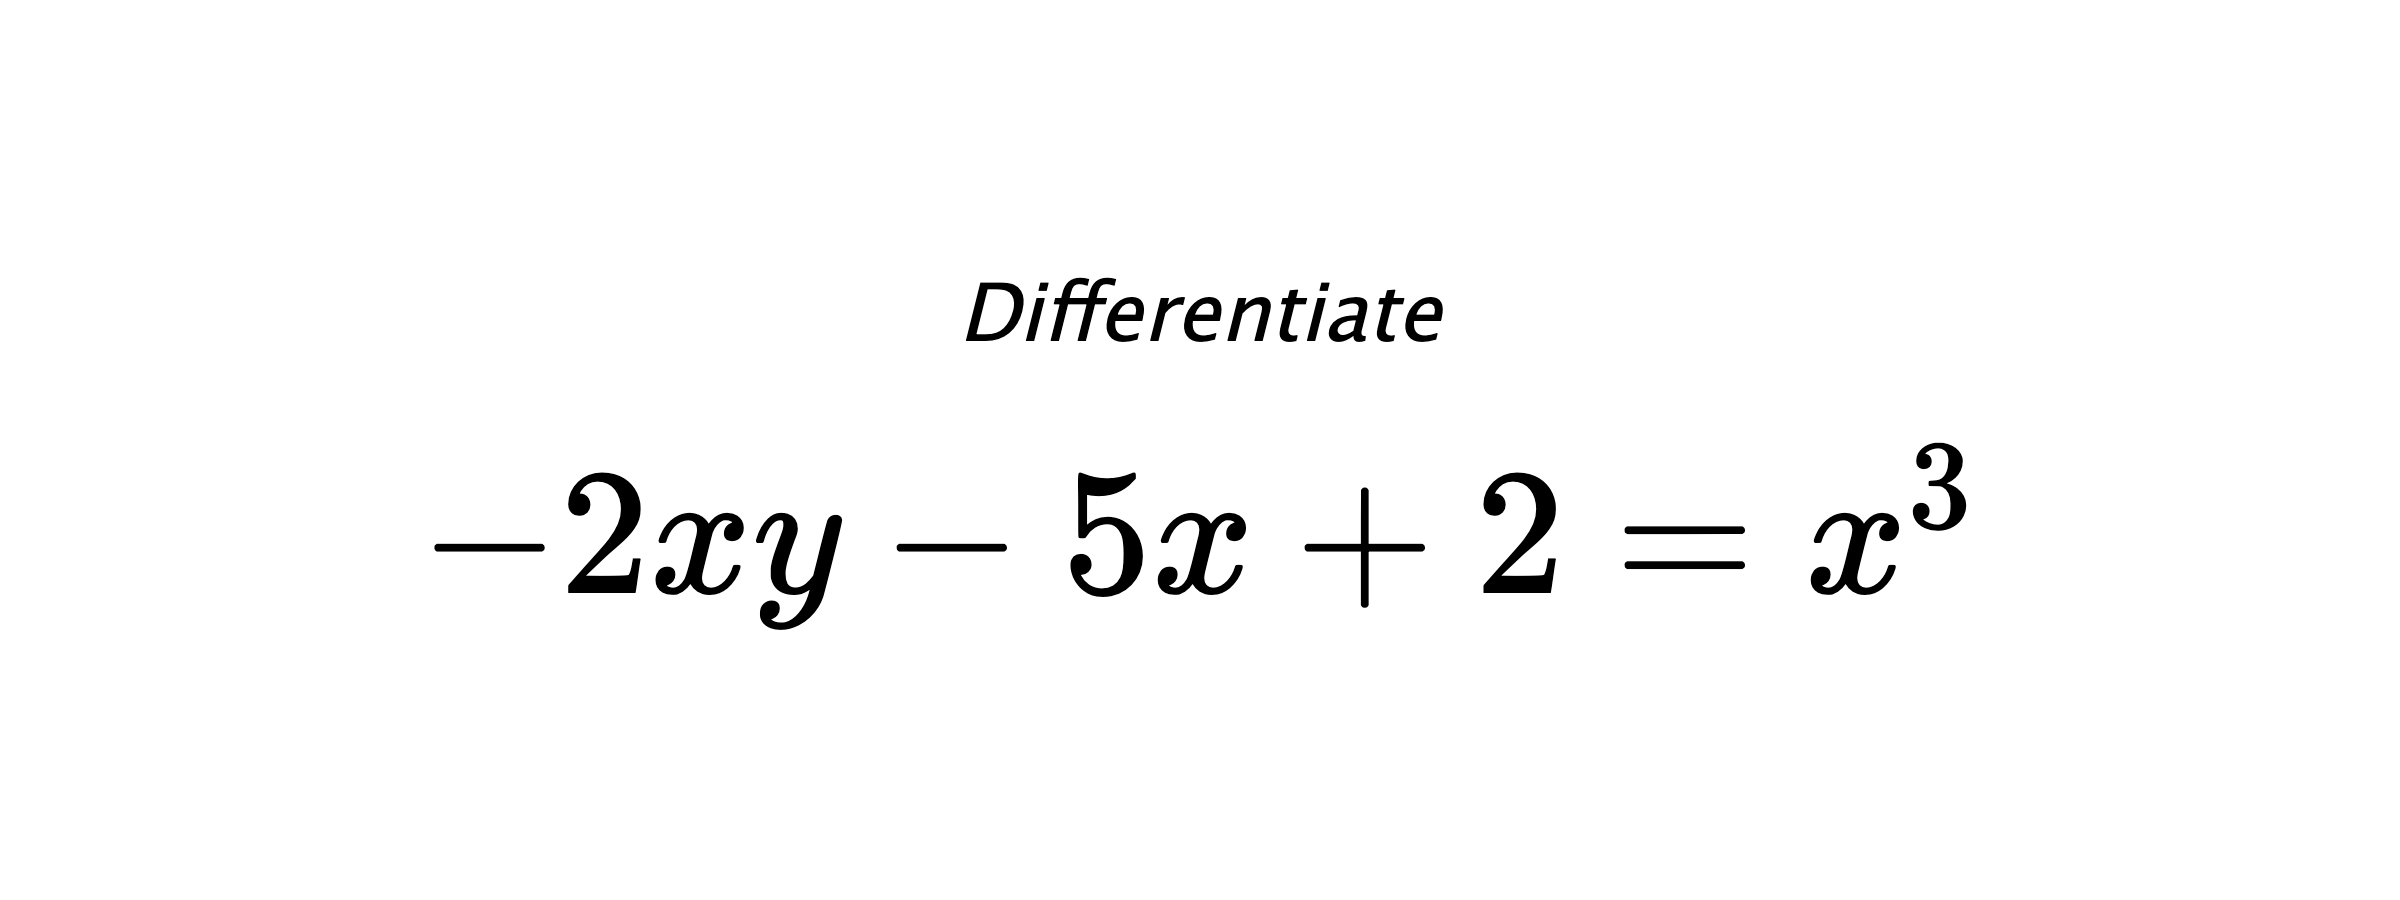 Differentiate $ -2xy-5x+2 = x^3 $